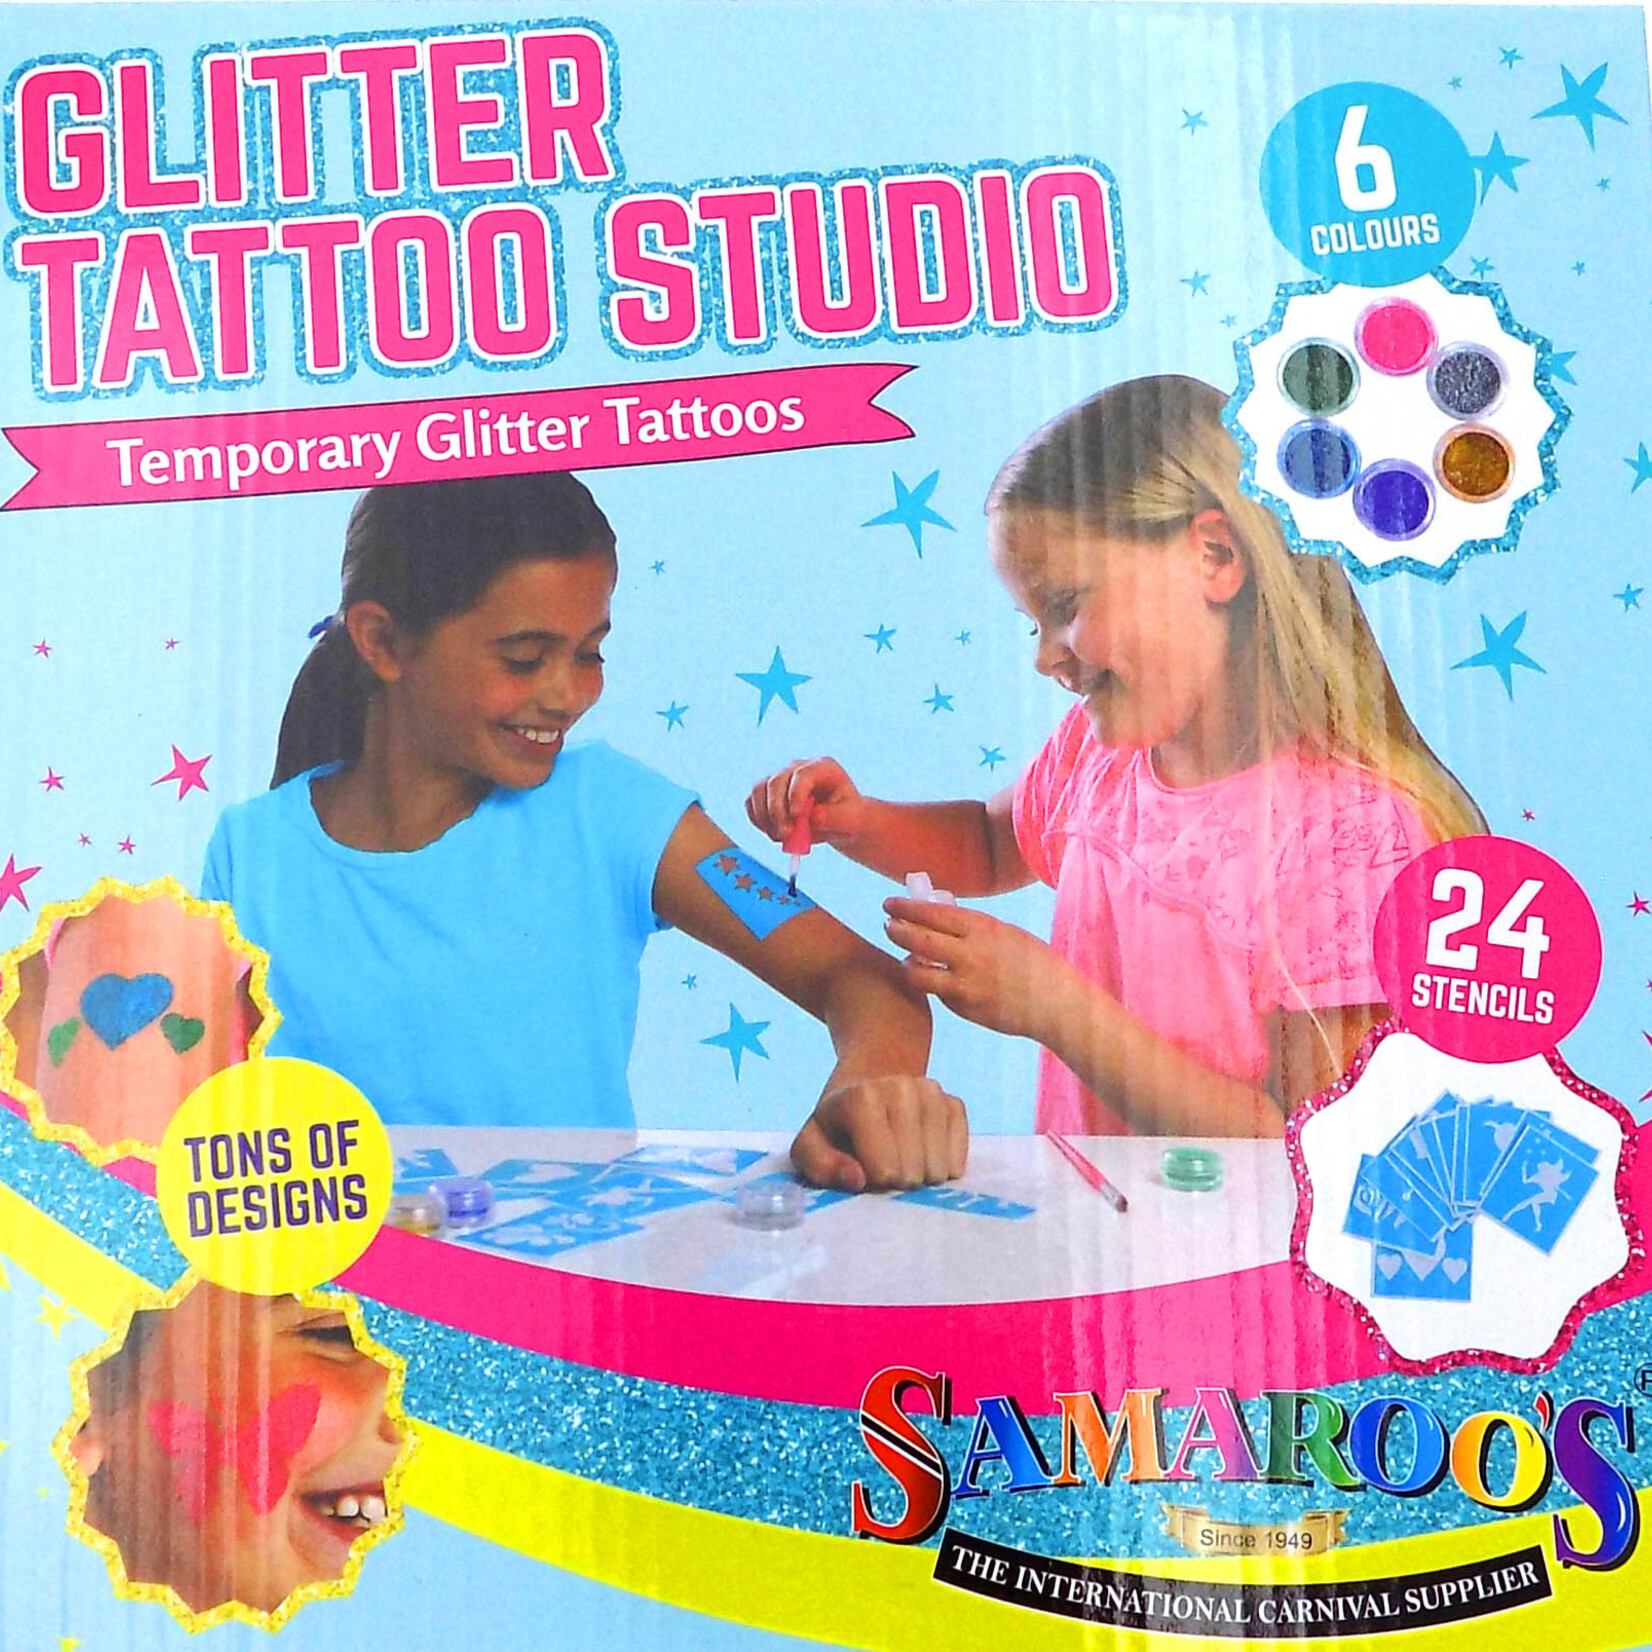 Temporary Glitter Tattoo Studio